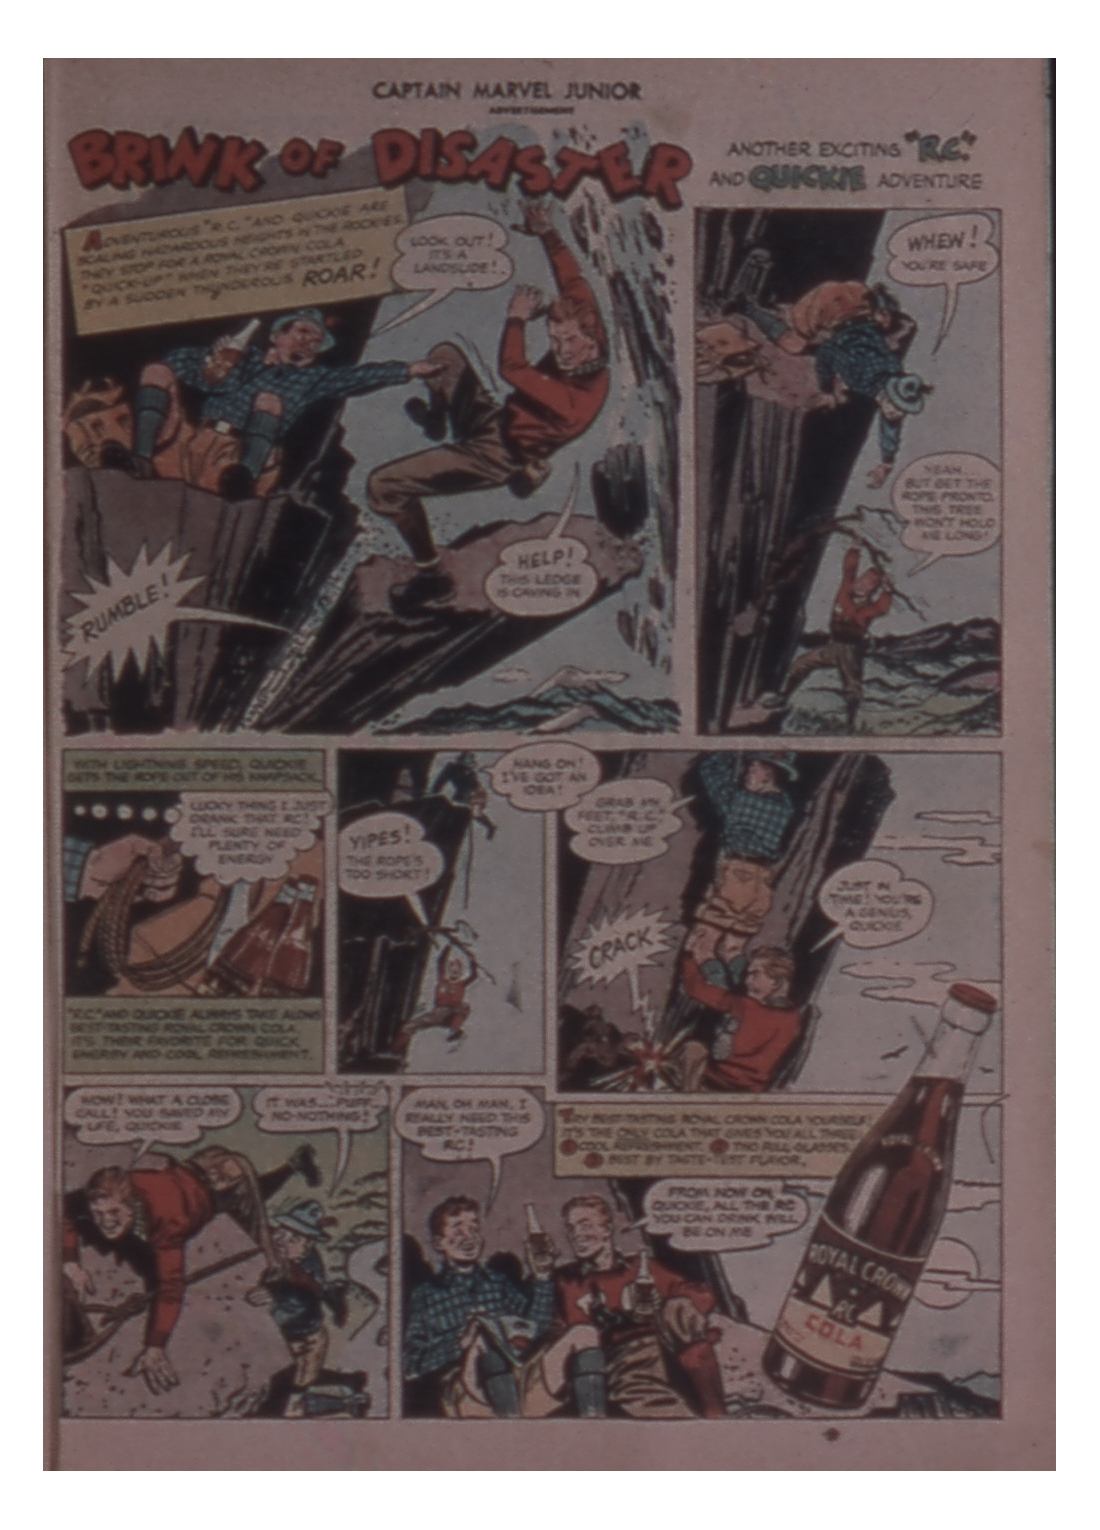 Read online Captain Marvel, Jr. comic -  Issue #74 - 11